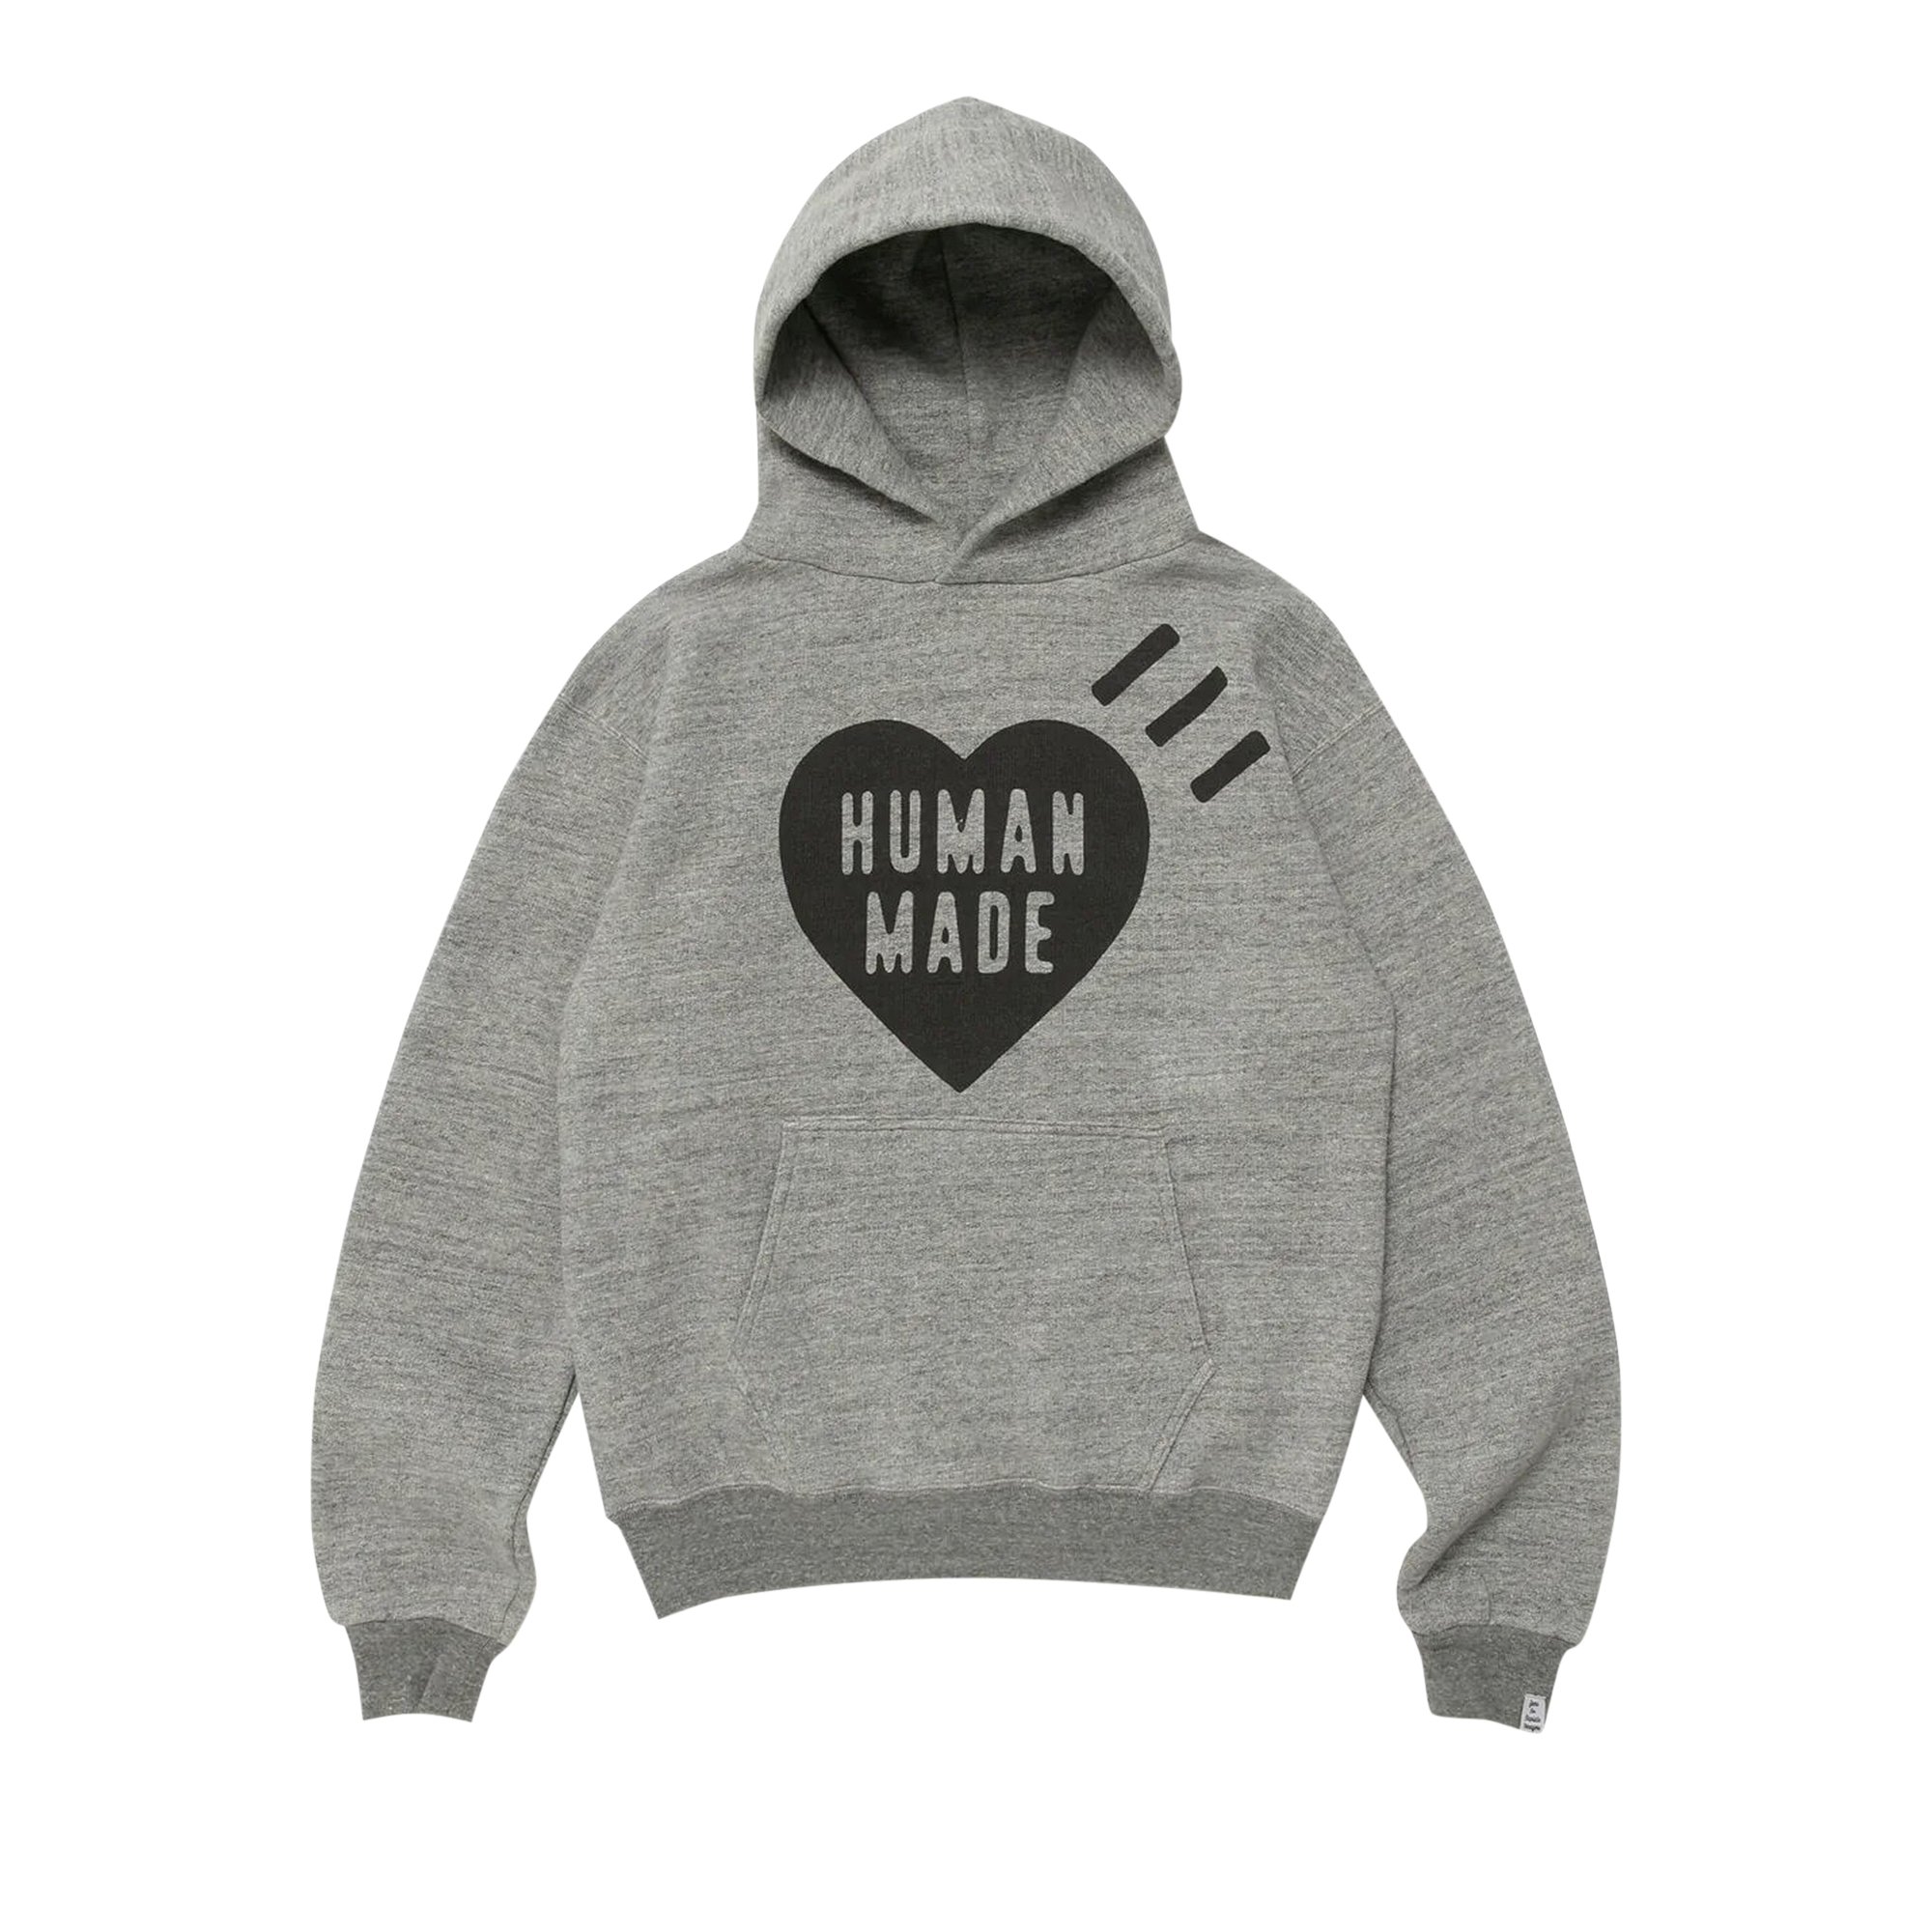 Buy Human Made Sweat Hoodie #1 'Grey' - HM25CS017 GREY | GOAT